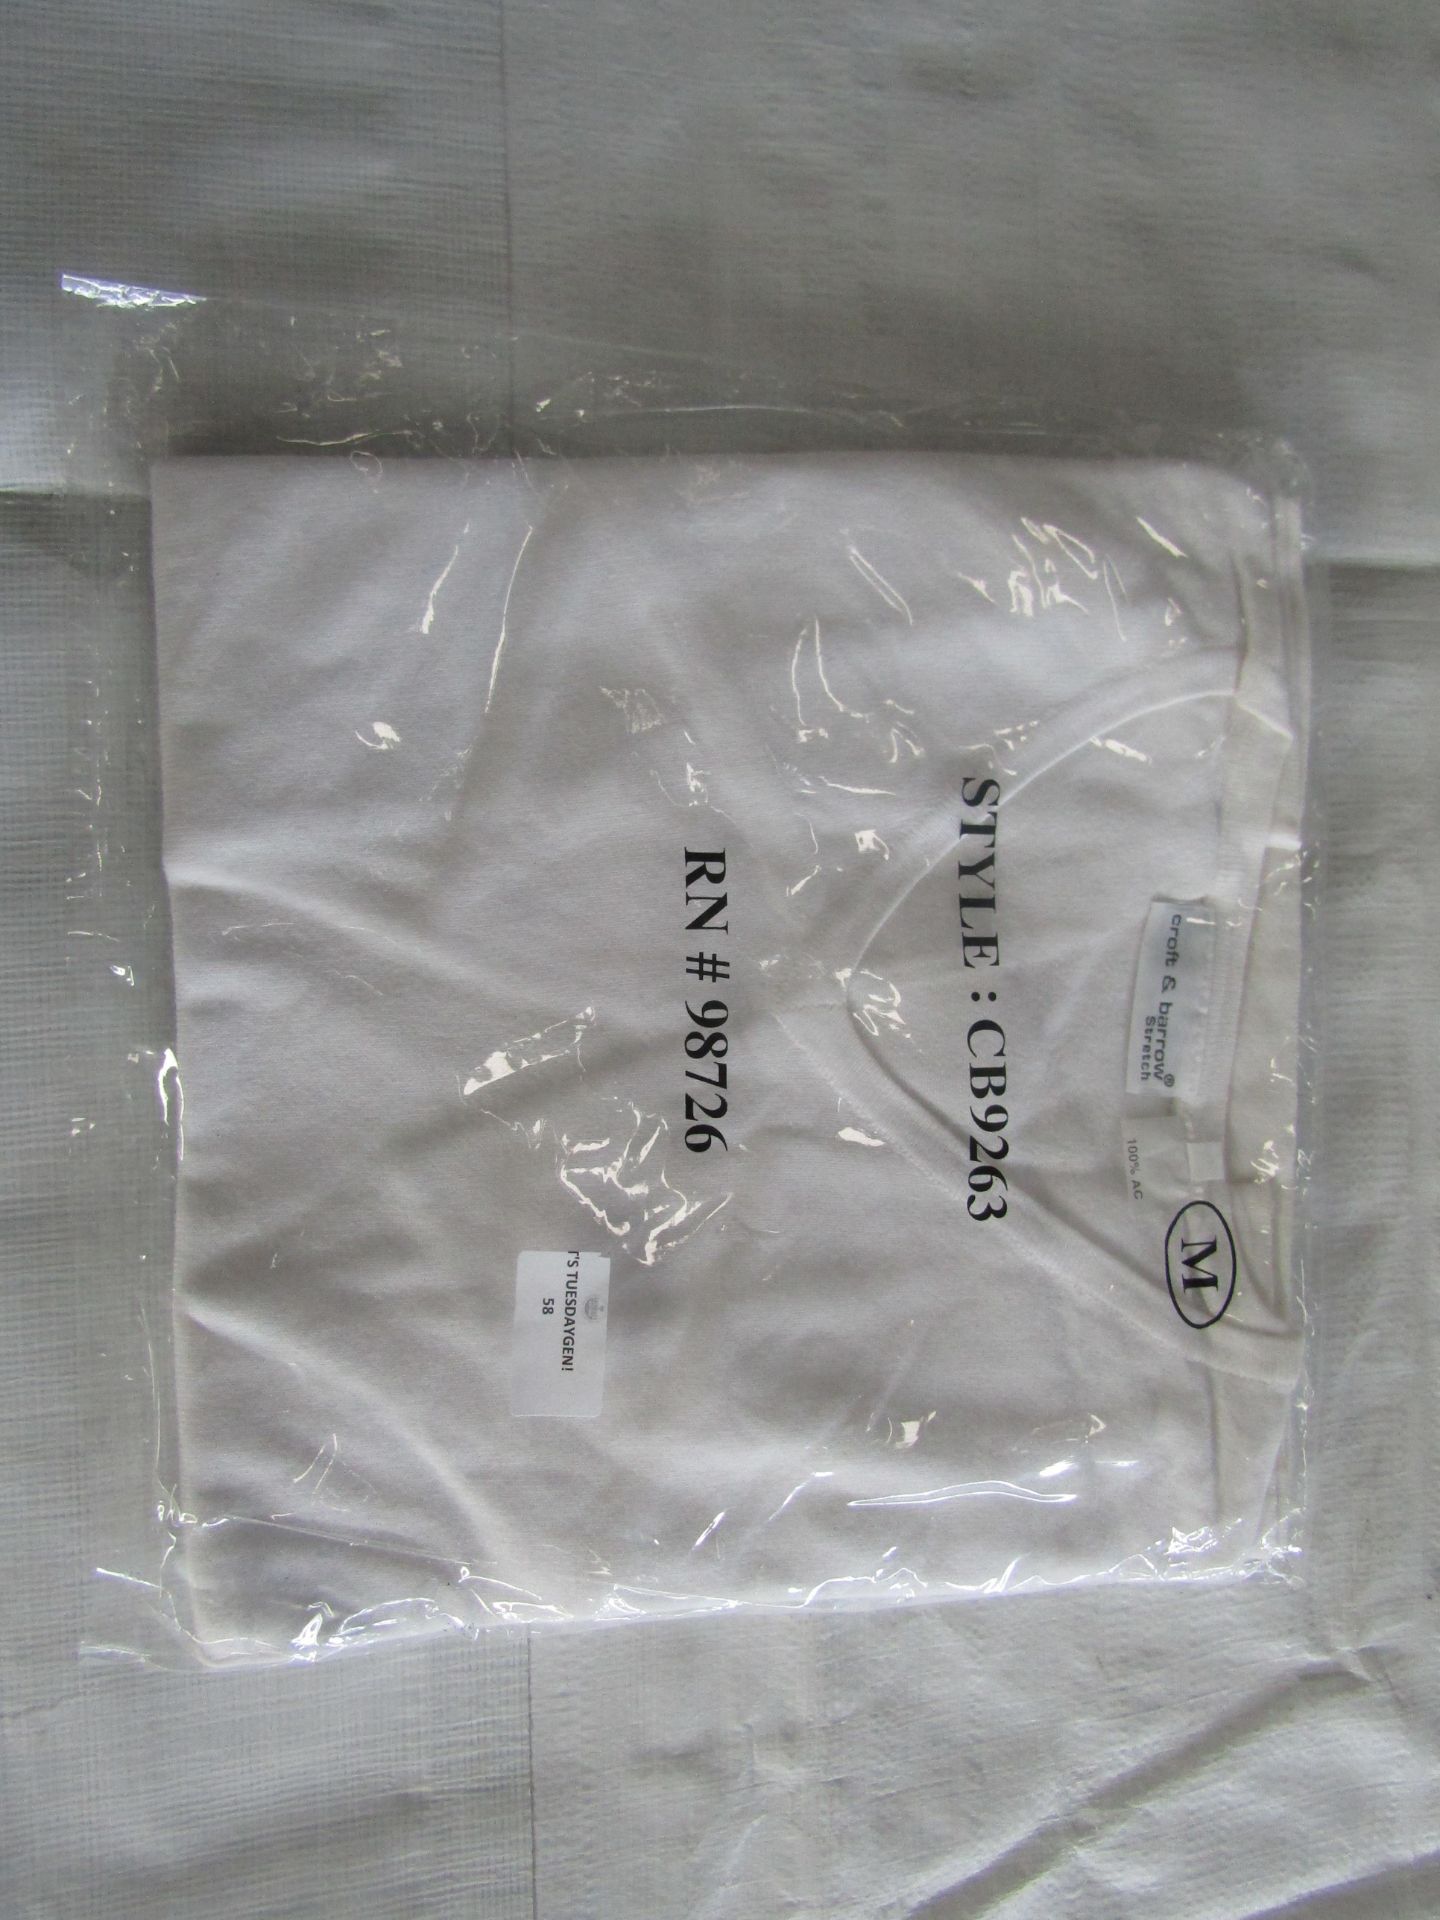 9x Croft & Barrow - White Stretch V-Neck T-Shirt - Size Medium - Unused & Packaged.